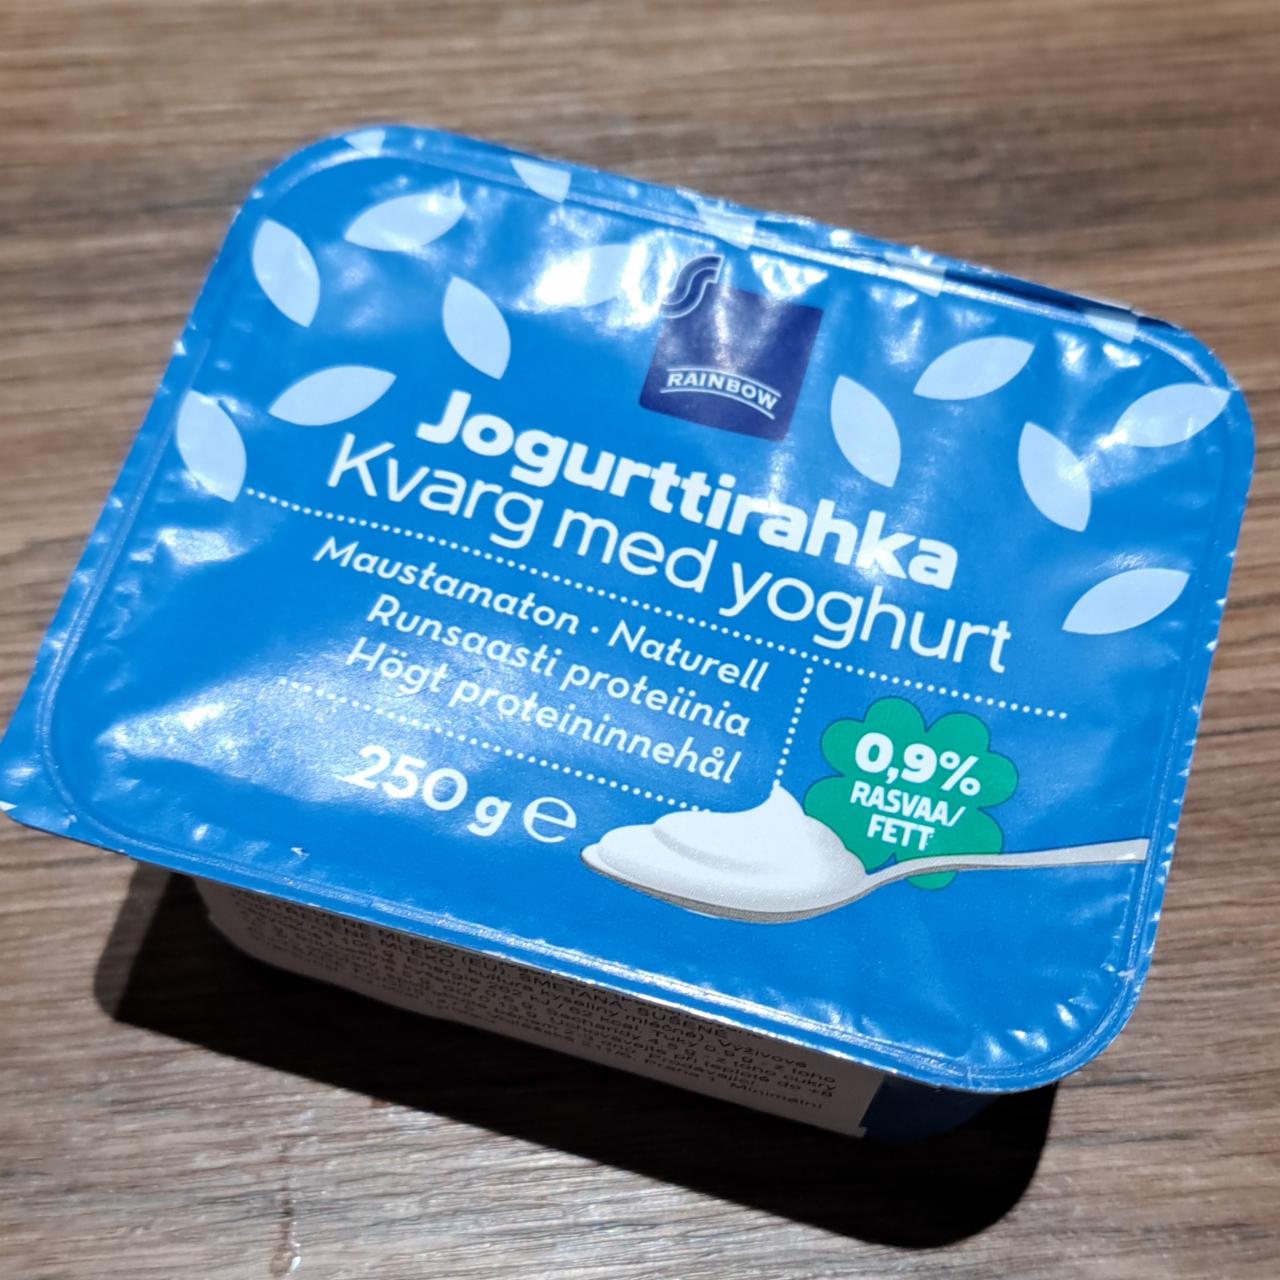 Fotografie - Jogurttirahka Kvarg med yoghurt 0,9% Fett Rainbow